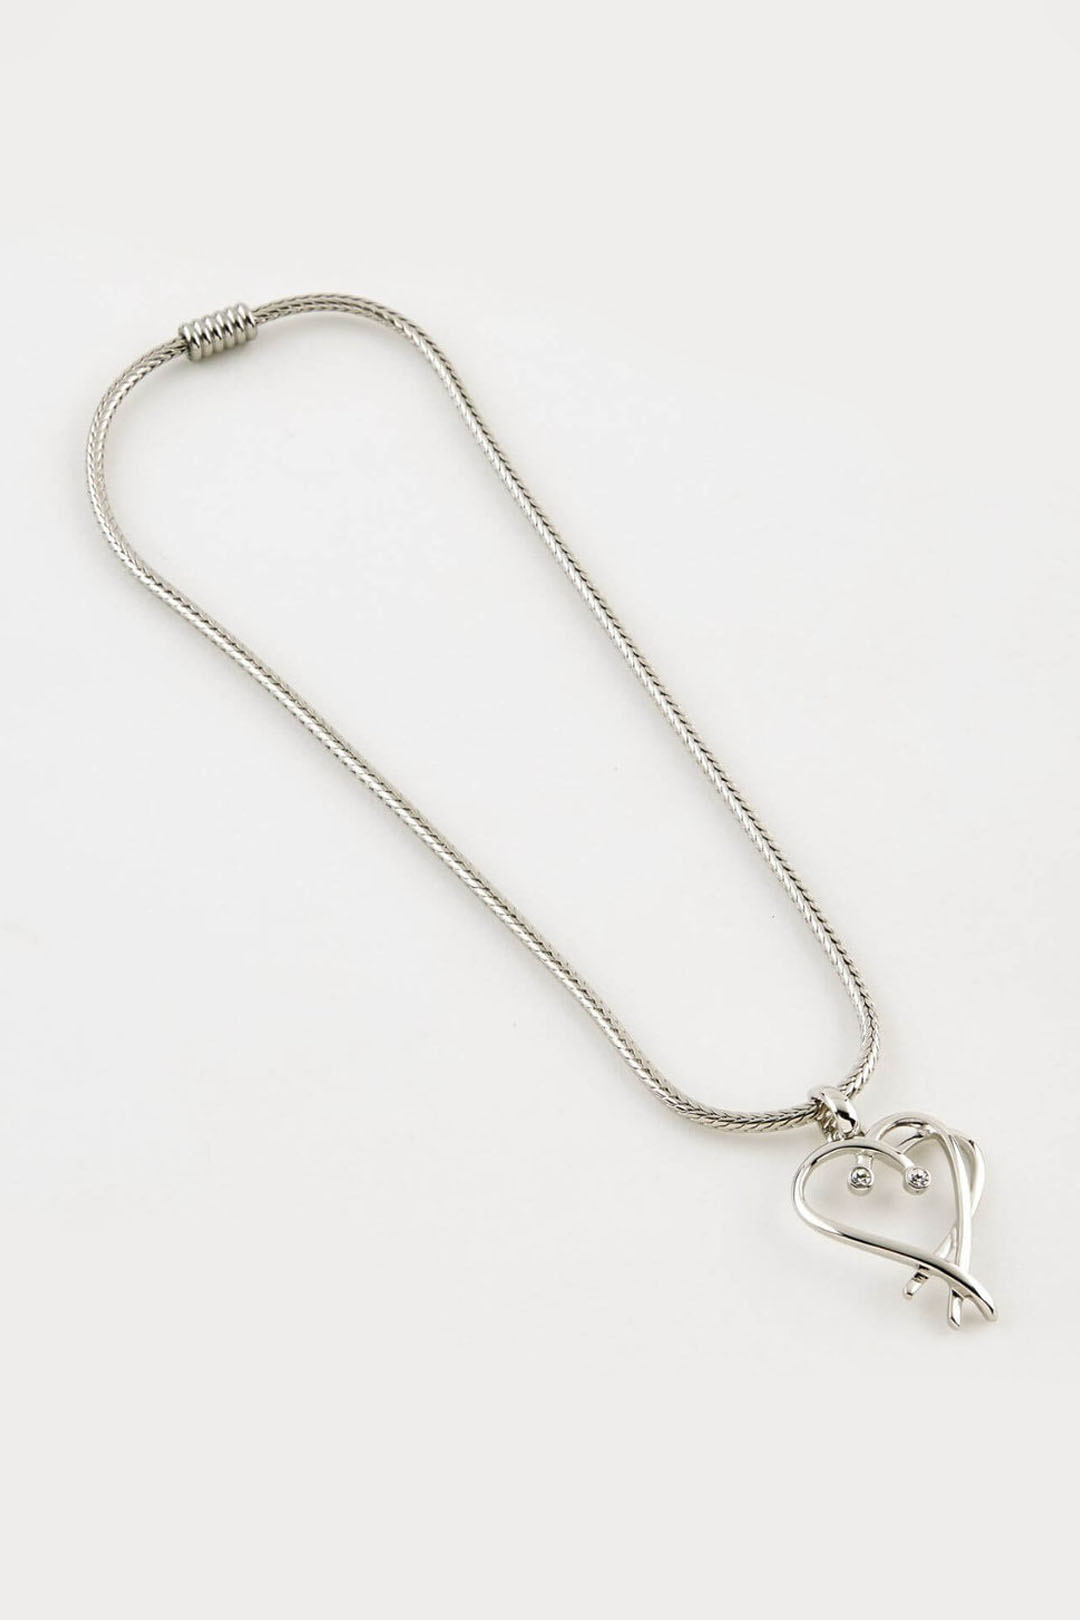 Dante NL12454 Silver Heart Necklace